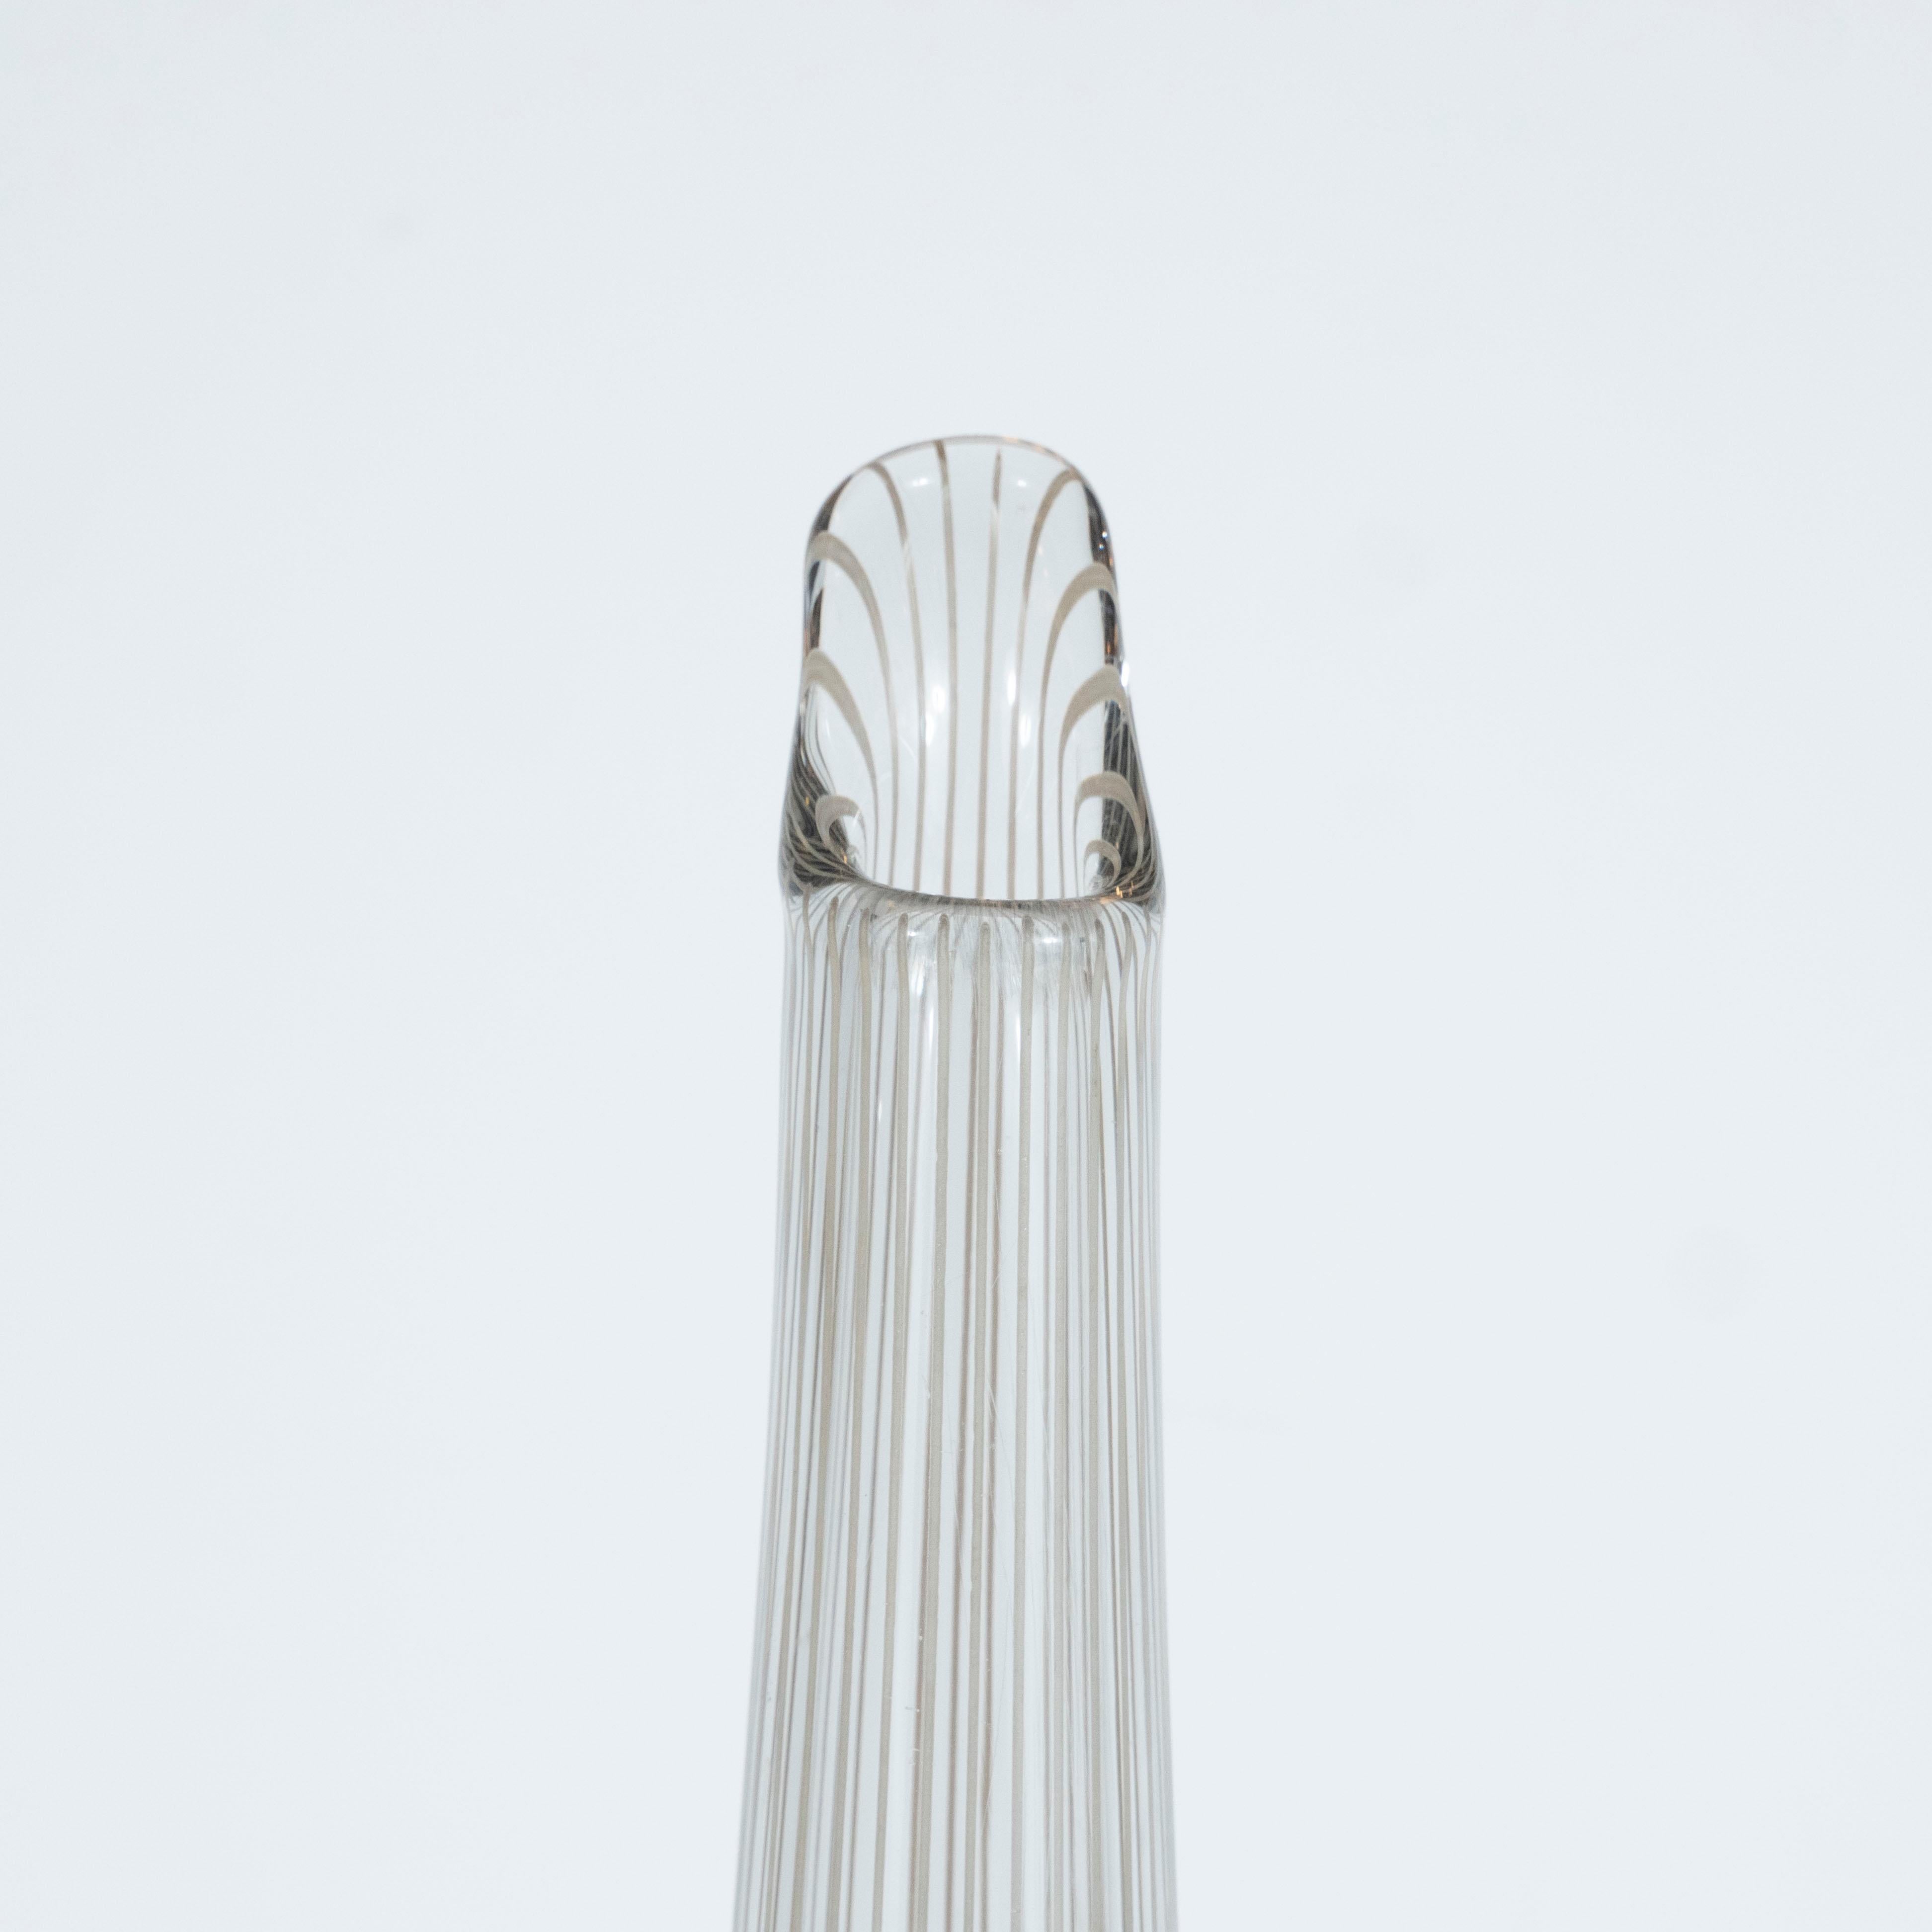 Swedish Scandinavian Mid-Century Modern Smoked Translucent Glass Striated Tear Drop Vase